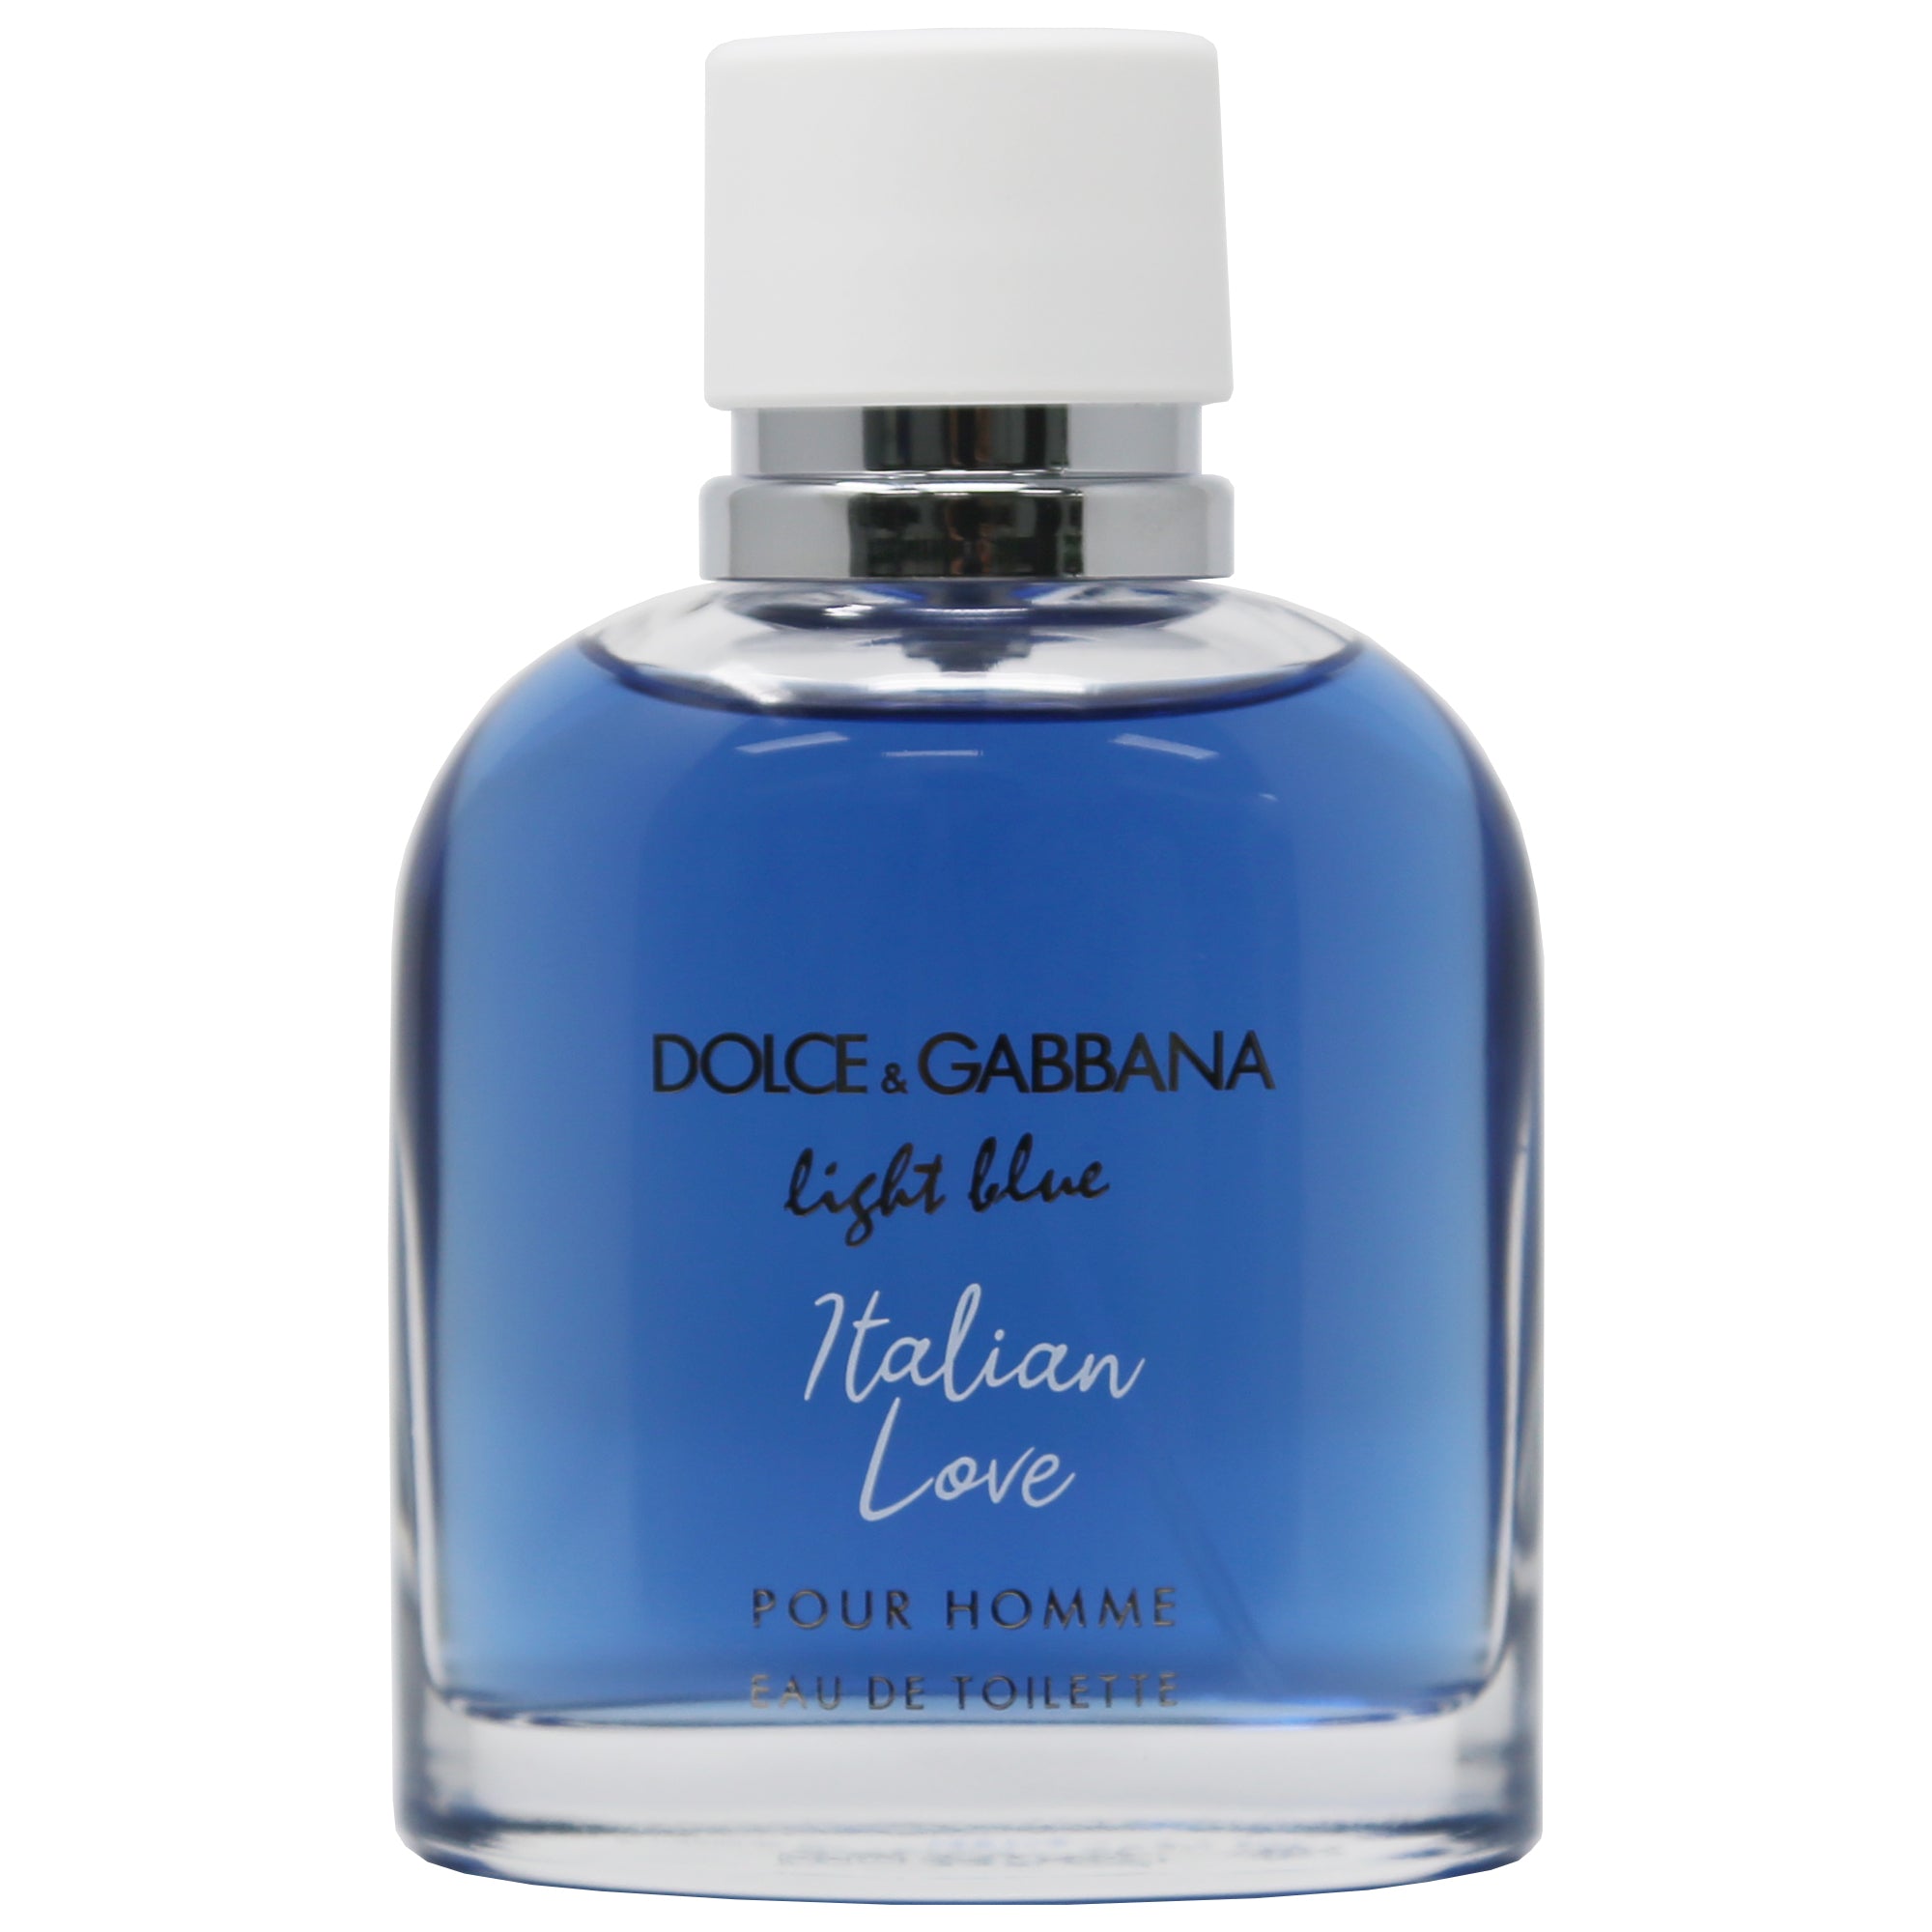 Light Blue Italian Love Pour Homme by Dolce & Gabbana - Samples